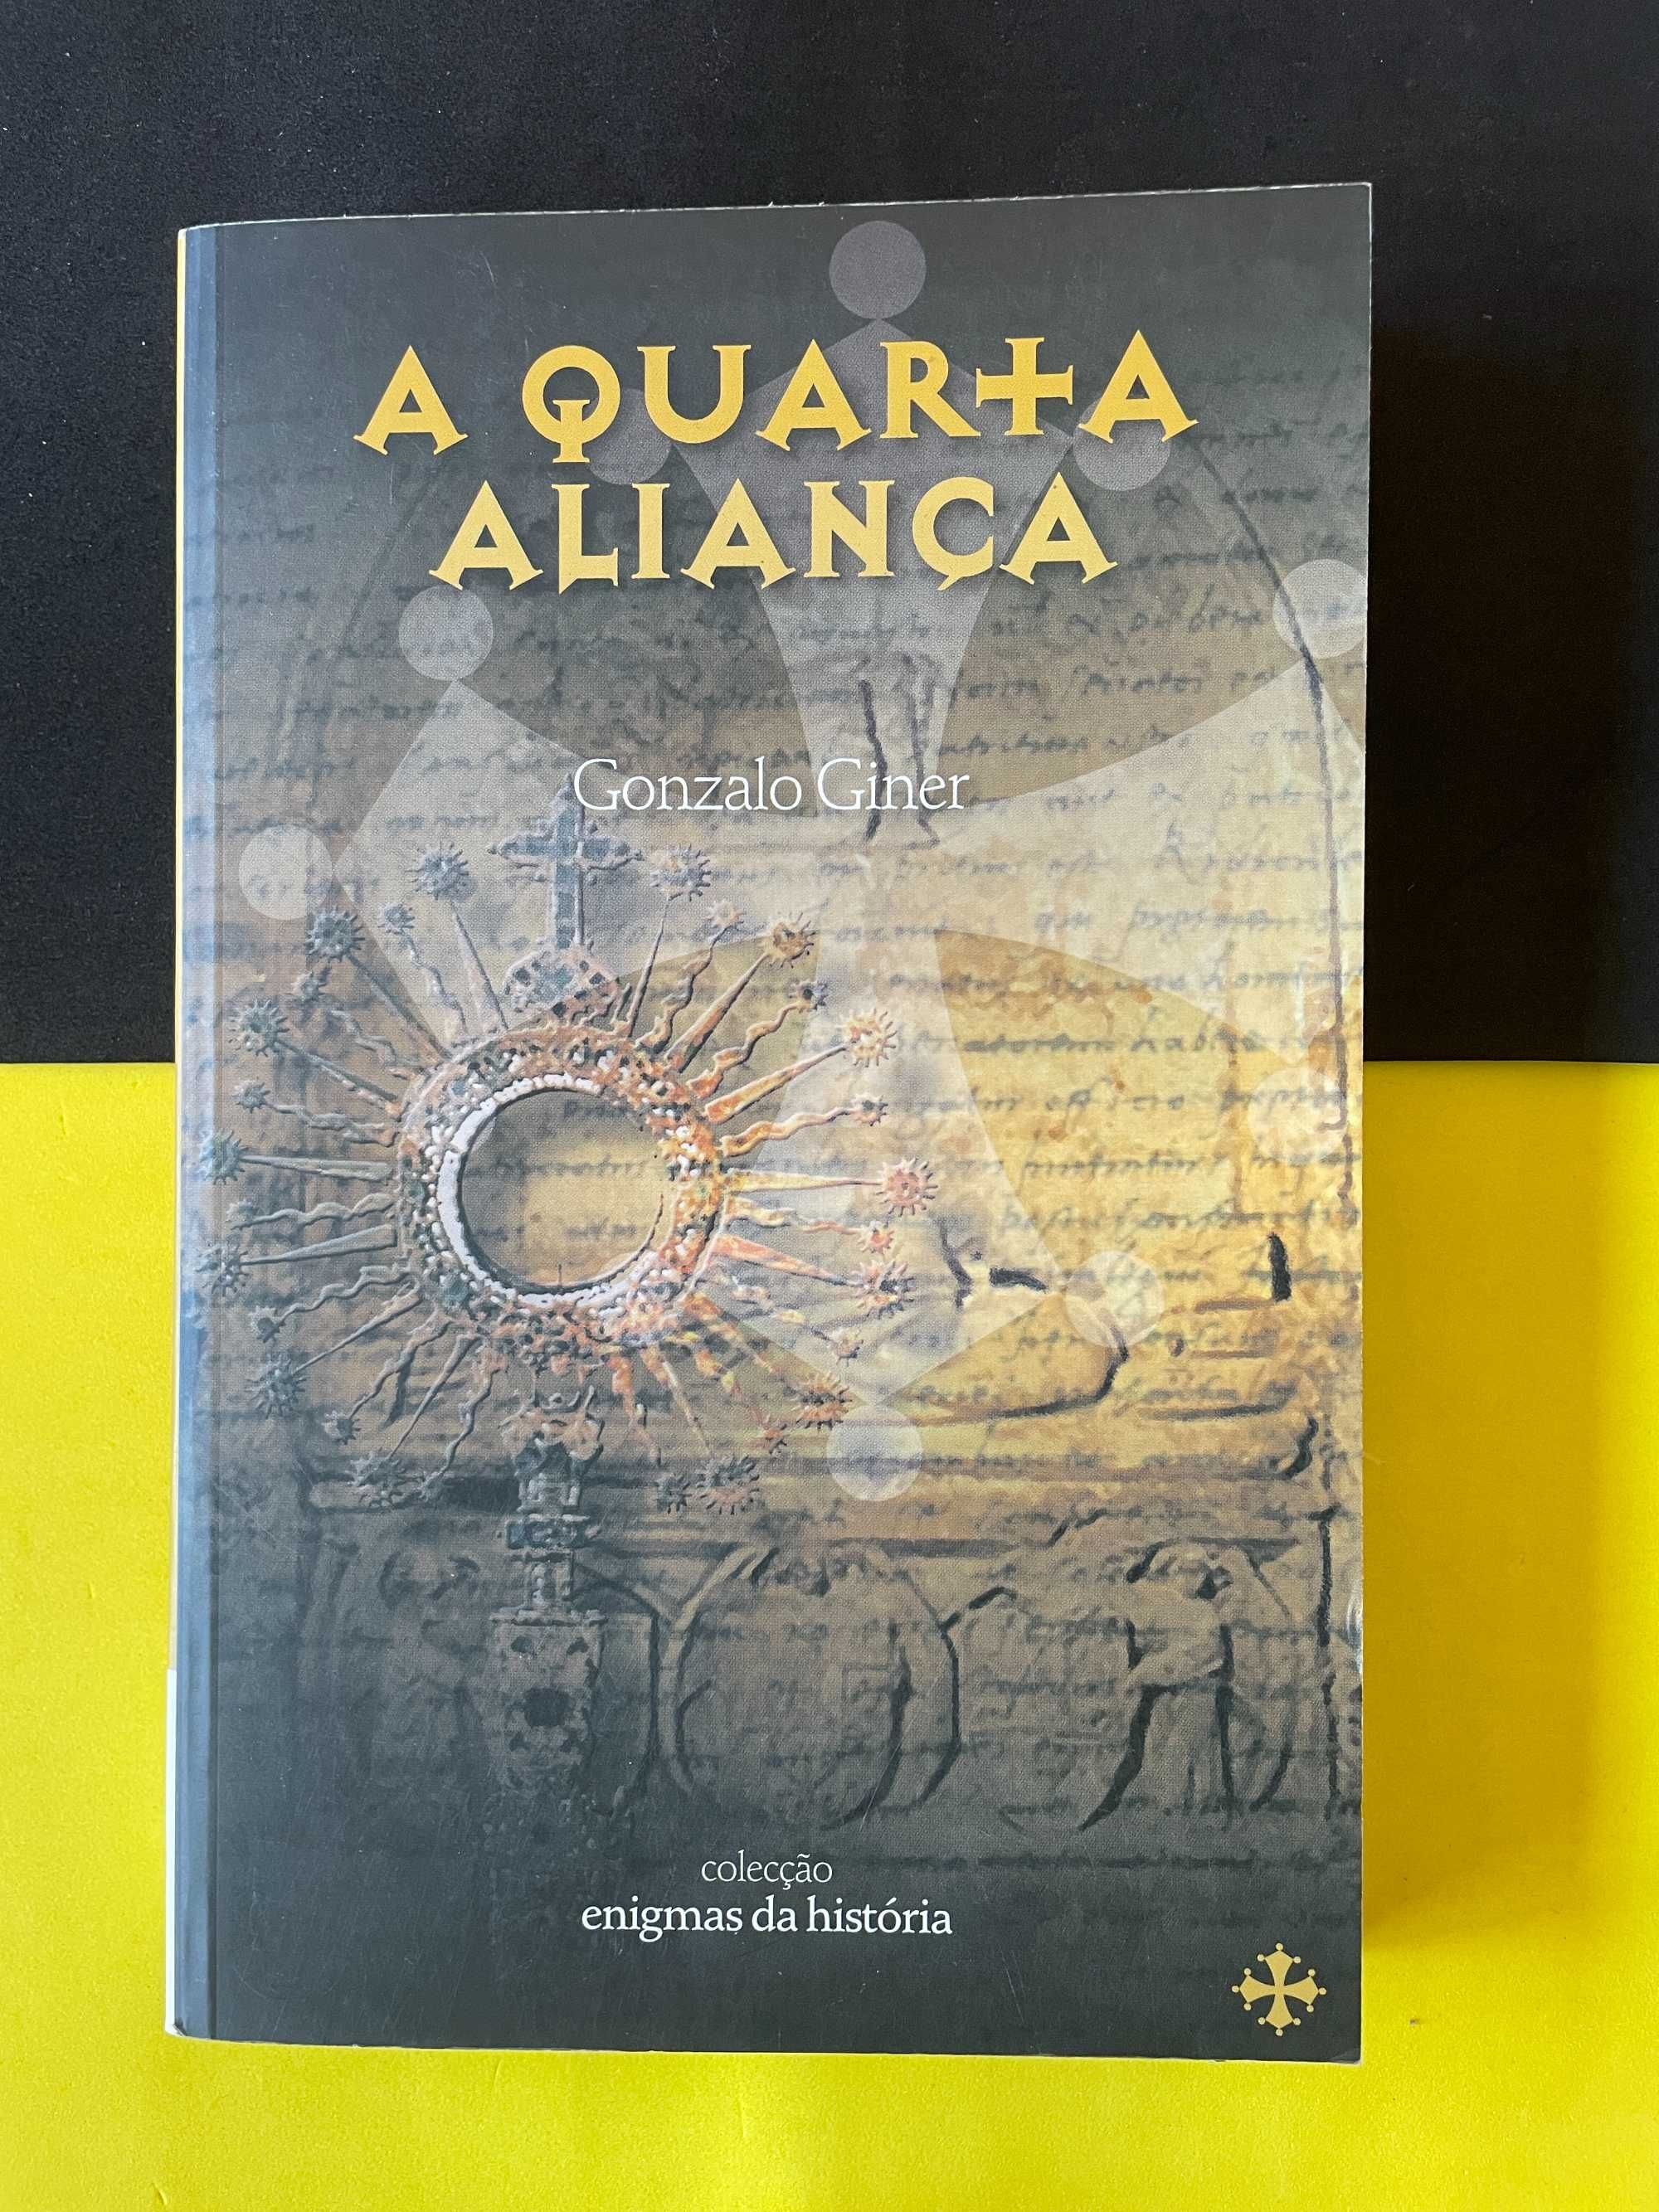 Gonzalo Giner - A Quarta Aliança